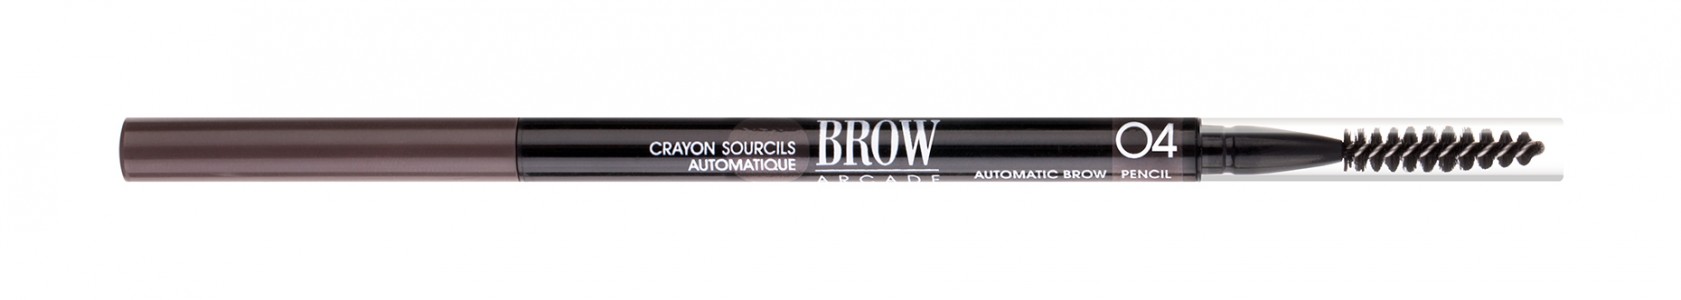 Карандаш для бровей Vivienne Sabo Brow Arcade Automatic Eyebrow Pencil 04 (Цвет 04 Серо-коричневый variant_hex_name 45322B) (6680)